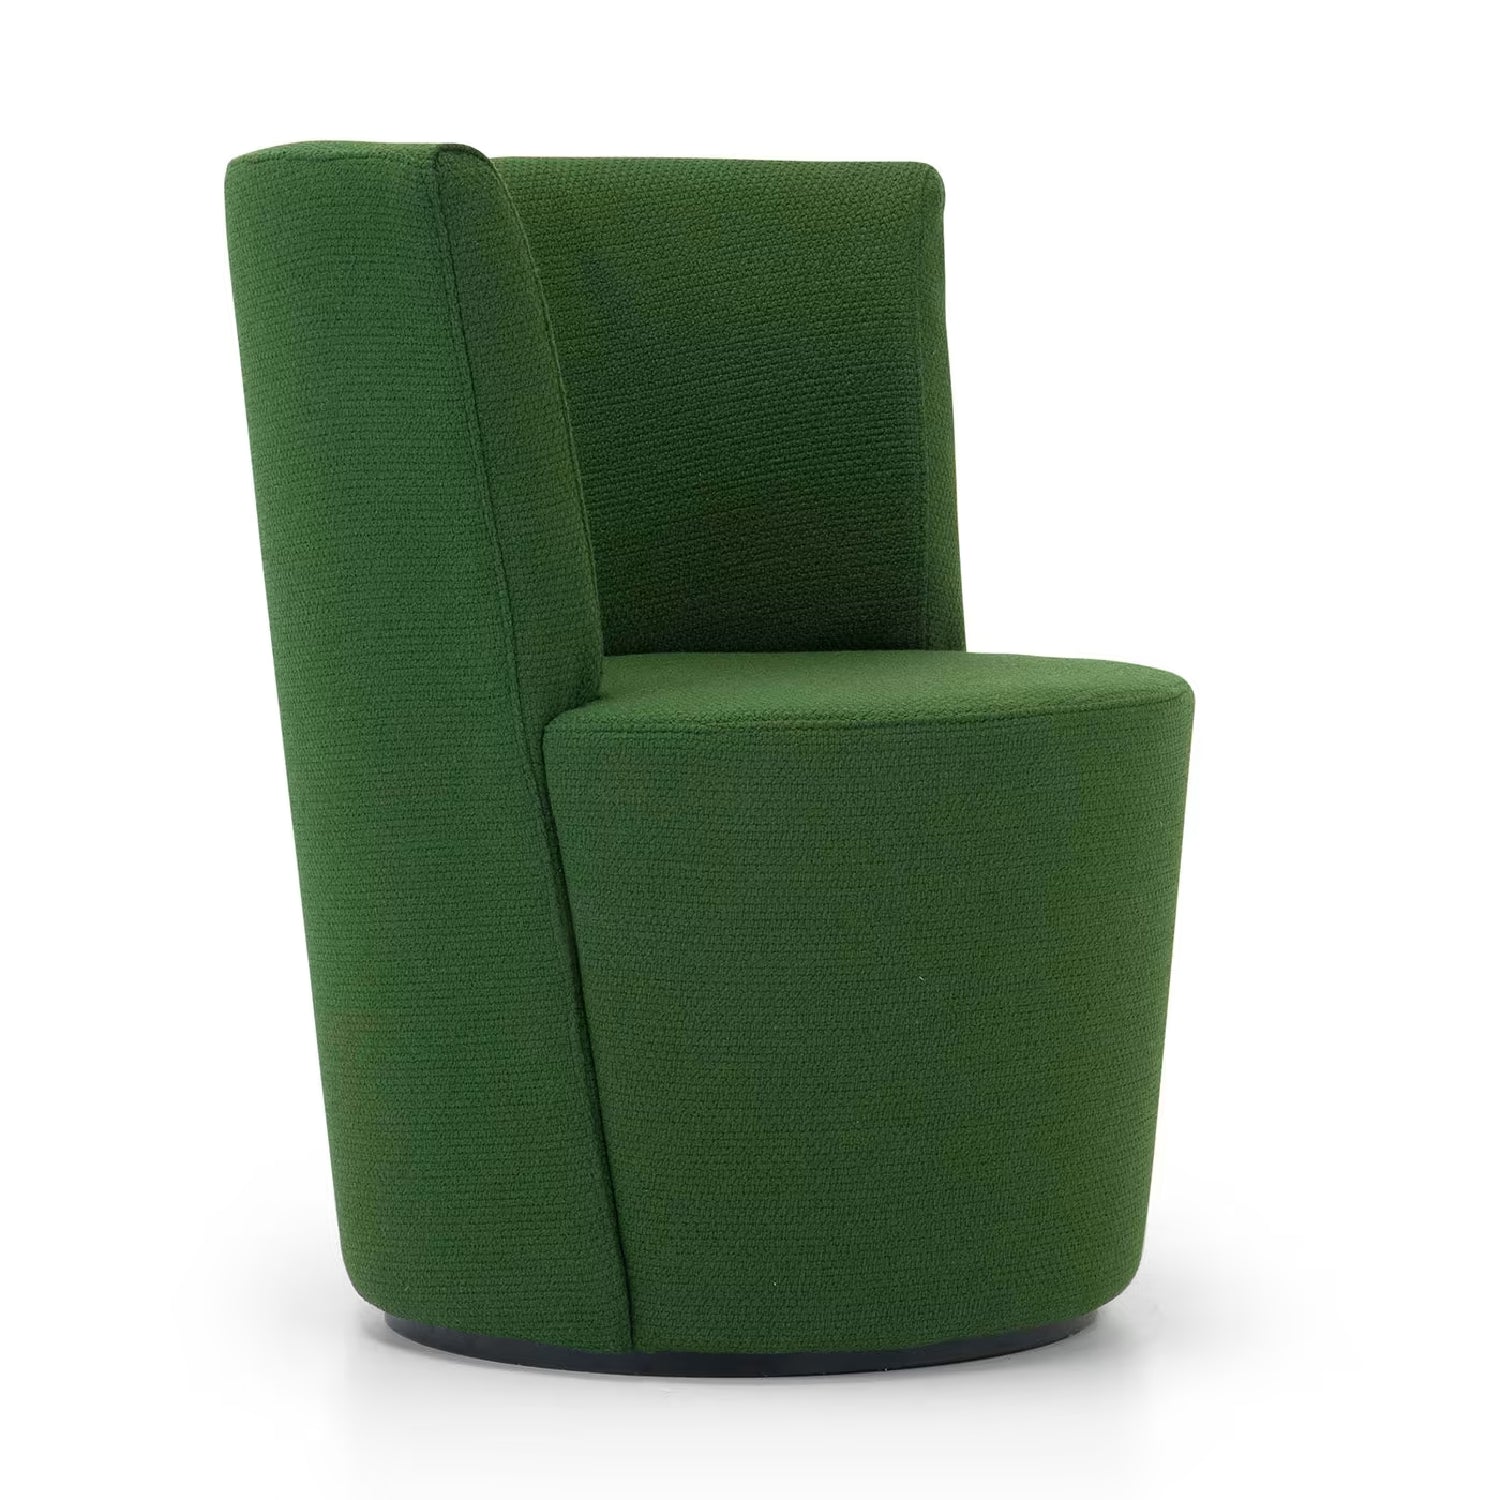 Ronda Green Armchair by Domingo Salotti